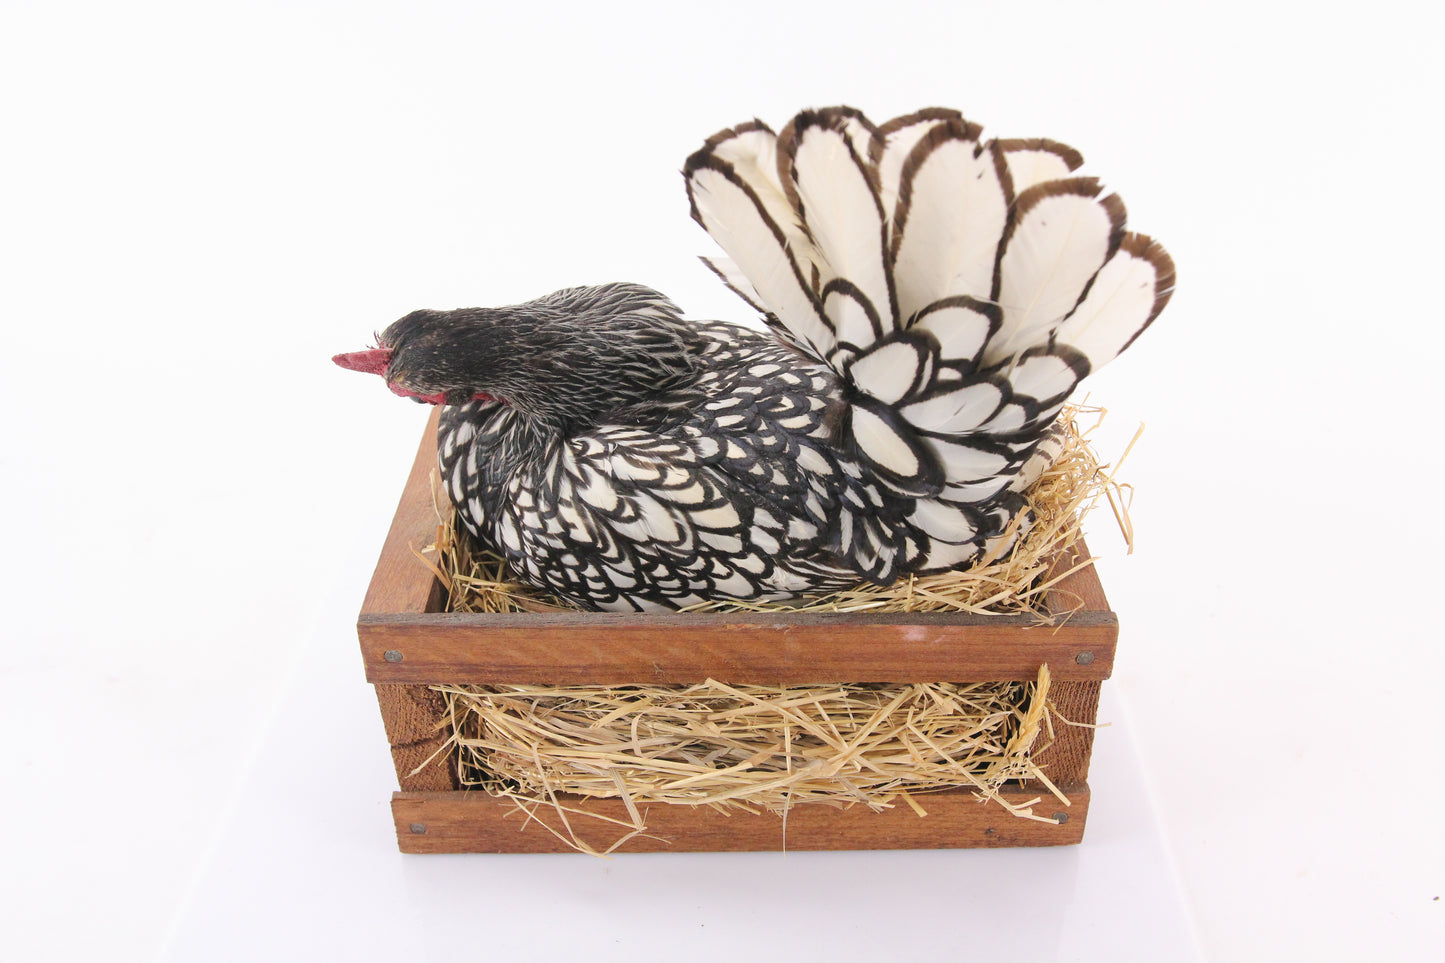 Silver Sebright Bantam Chicken Hen on Basket Authentic Taxidermy